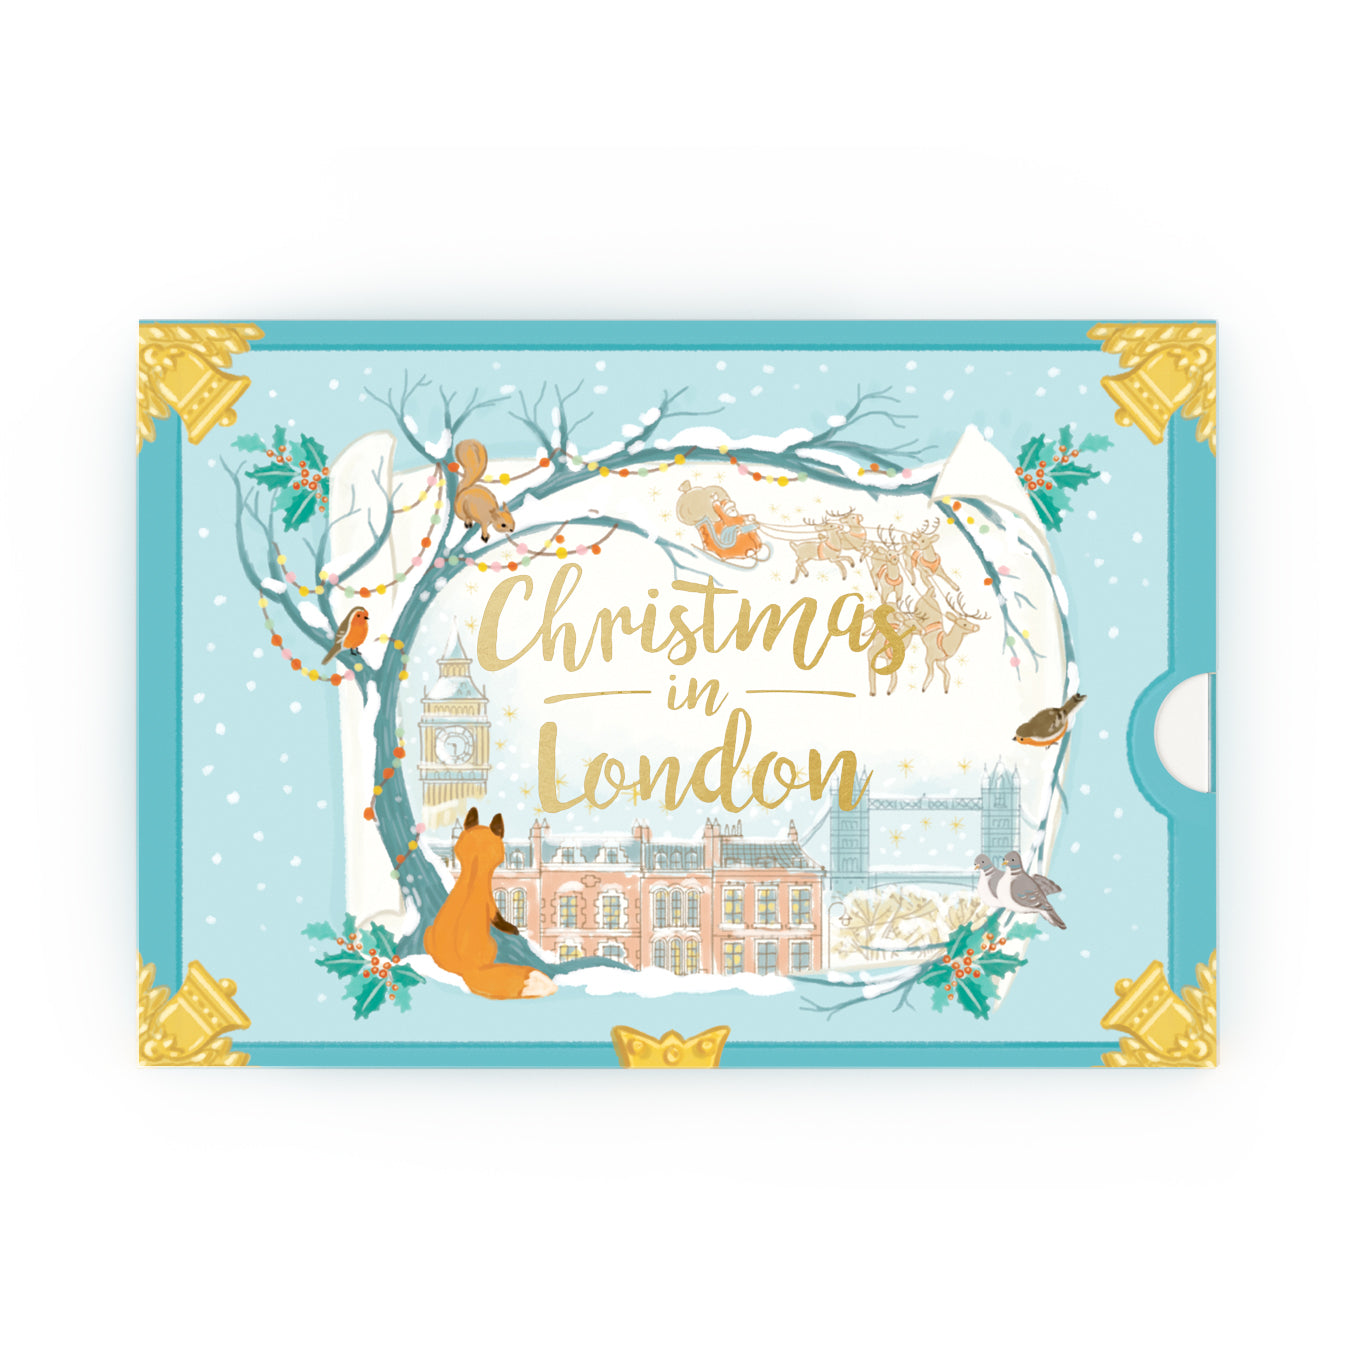 Christmas In London Music Box Card Novelty Dancing Musical Christmas Card